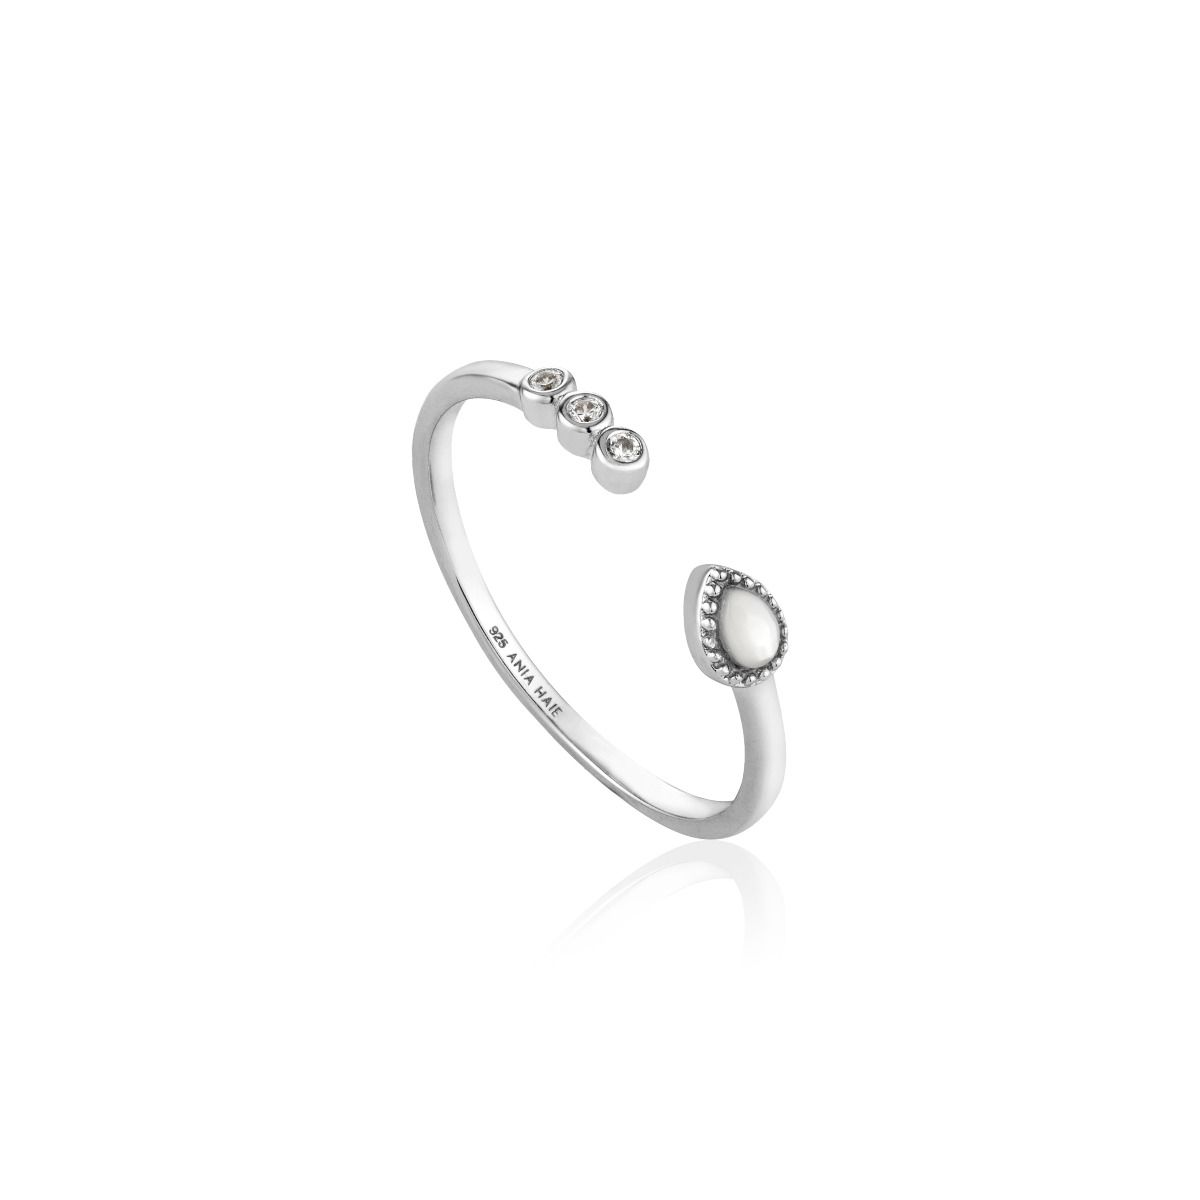 Buy Ania Haie Dream Adjustable Ring - Silver Online in UK